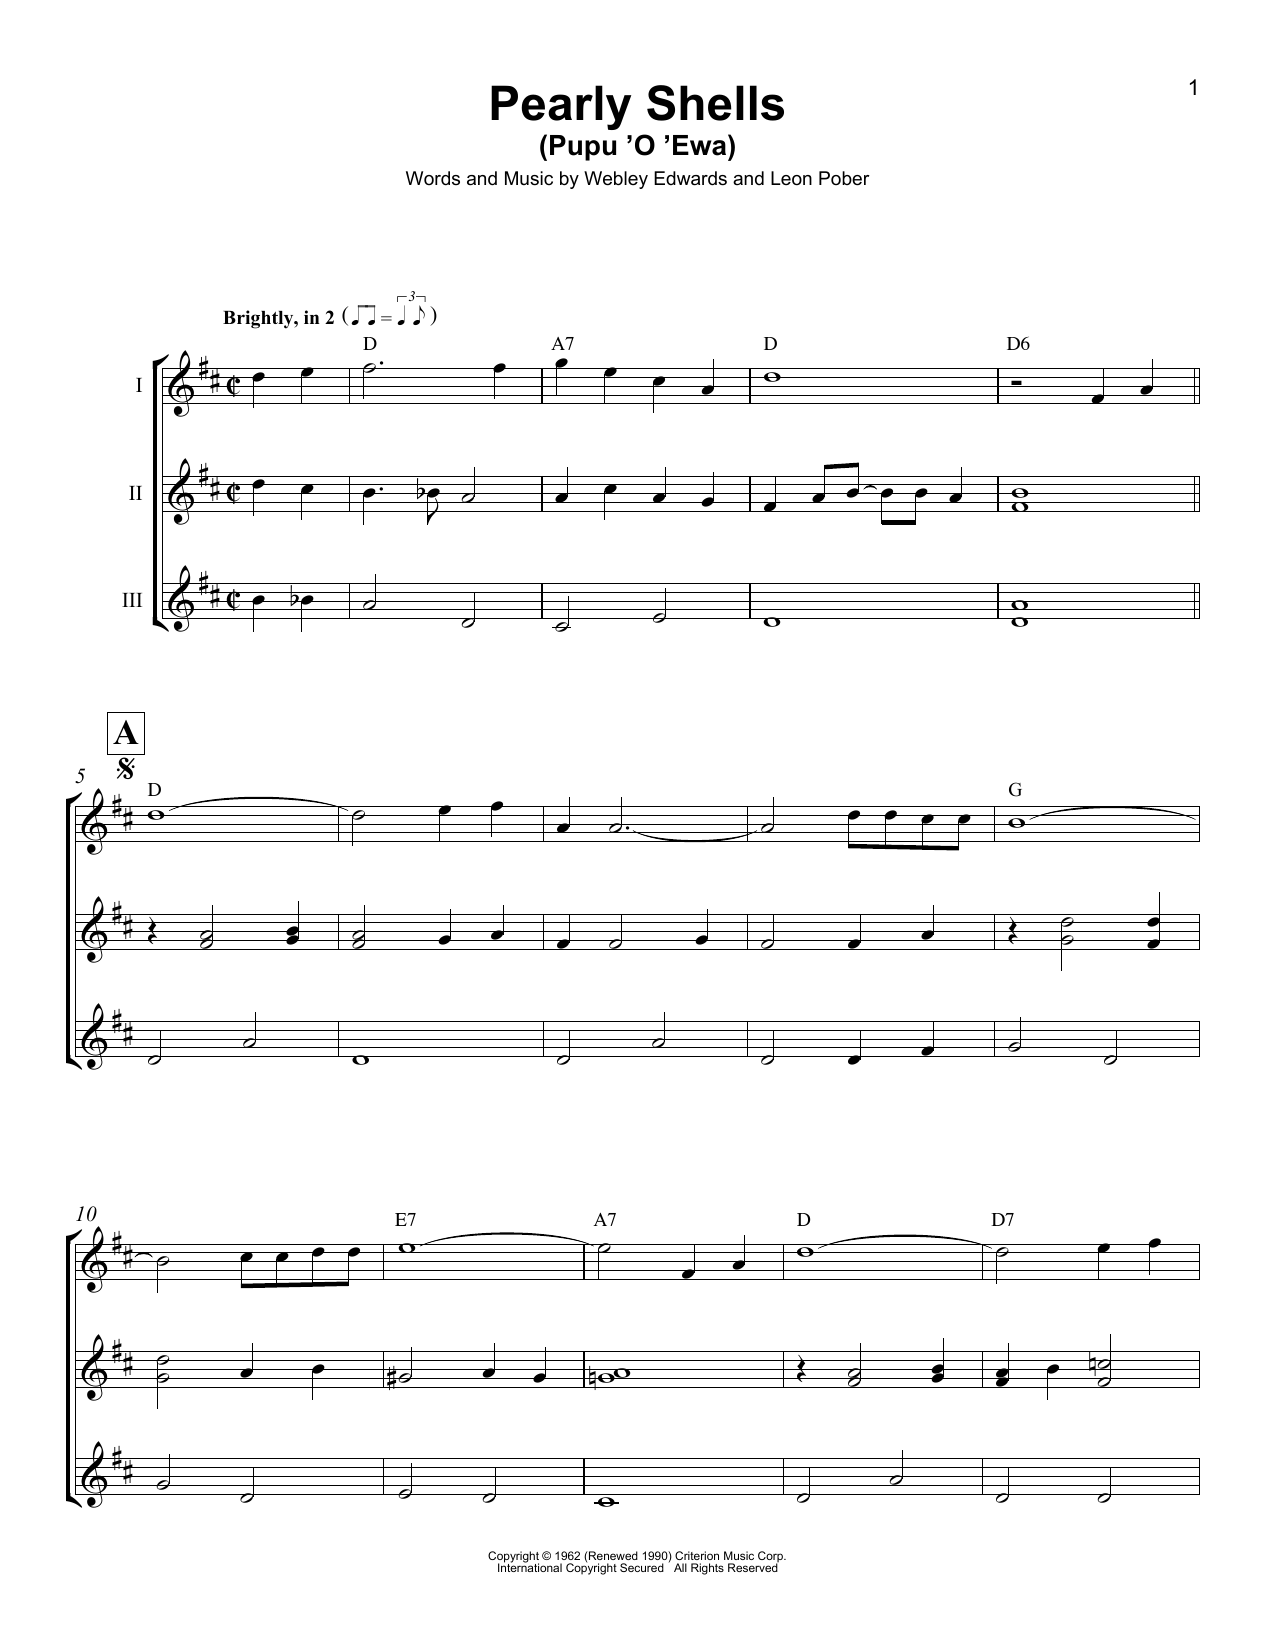 Download Webley Edwards Pearly Shells (Pupu O Ewa) Sheet Music and learn how to play Ukulele Ensemble PDF digital score in minutes